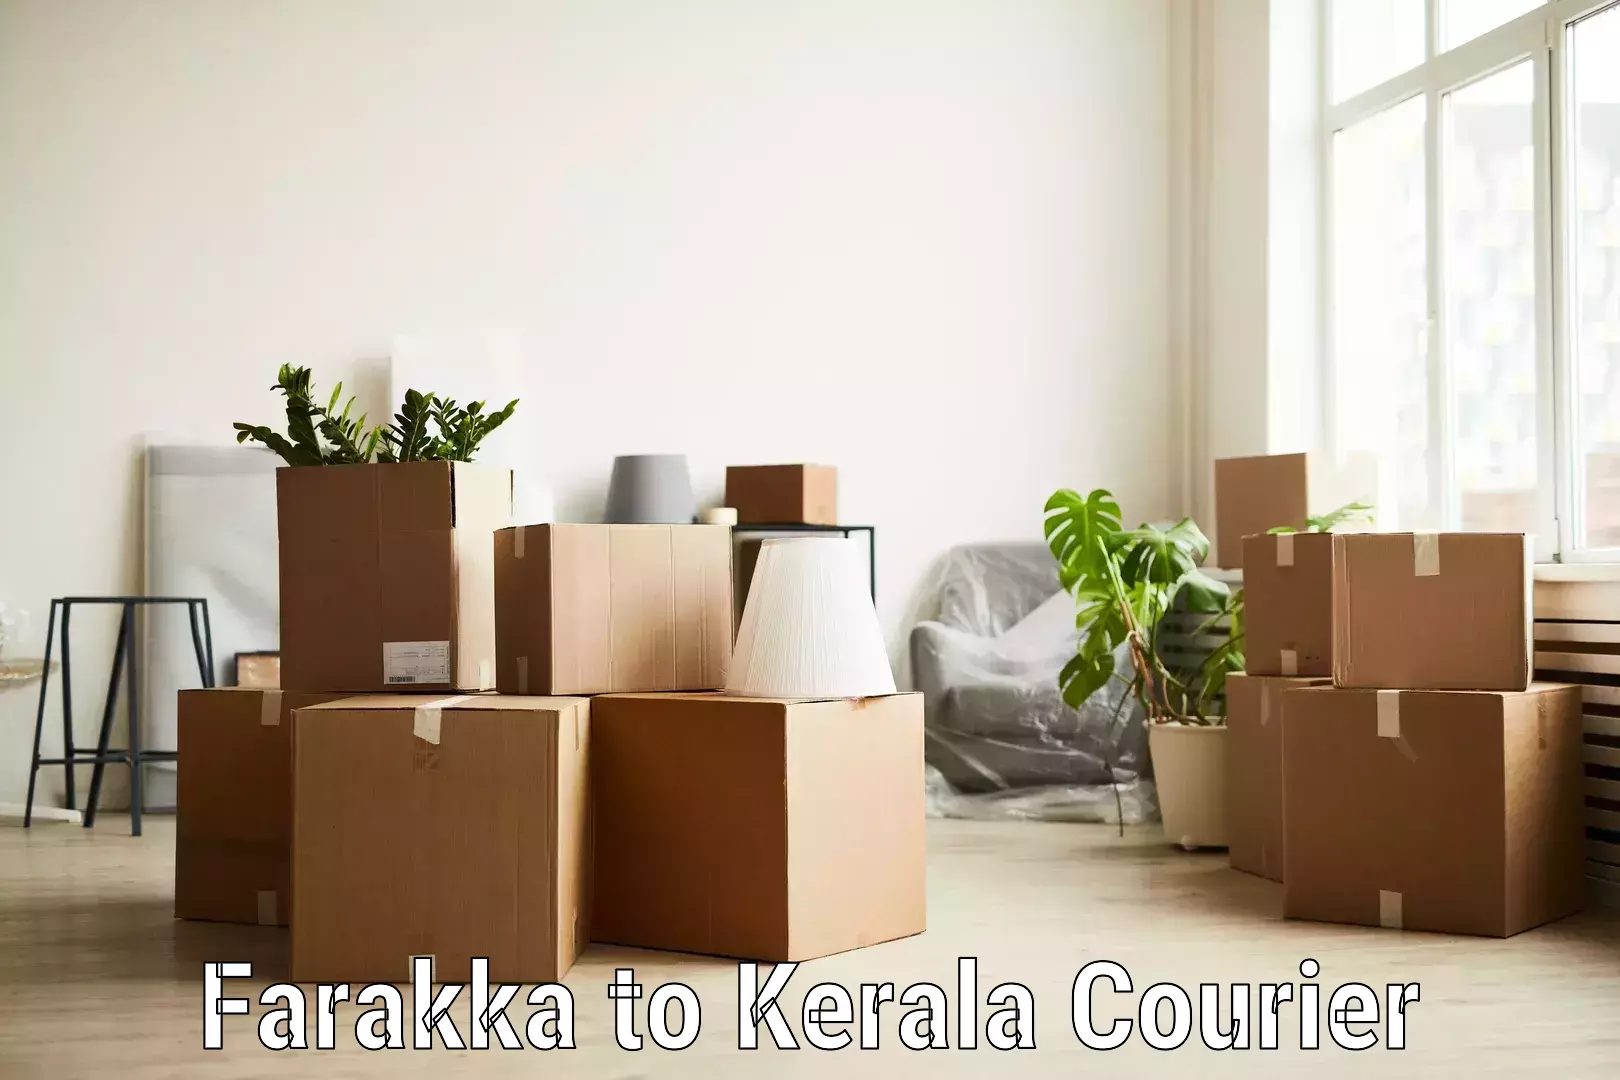 Express delivery network in Farakka to Kerala